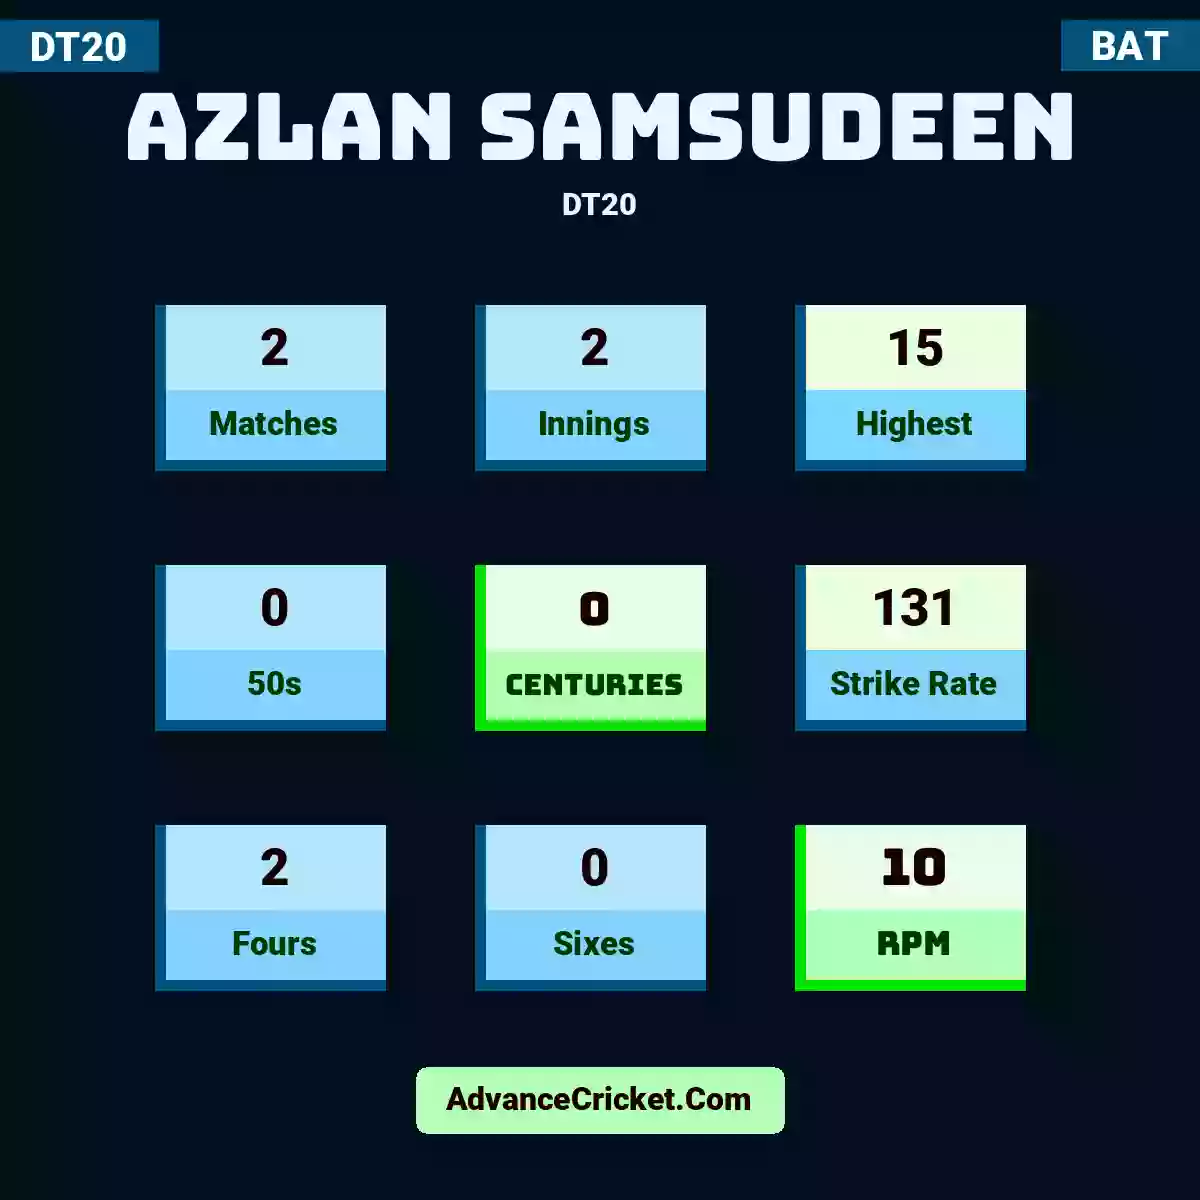 Azlan Samsudeen DT20 , Azlan Samsudeen played 2 matches, scored 15 runs as highest, 0 half-centuries, and 0 centuries, with a strike rate of 131. A.Samsudeen hit 2 fours and 0 sixes, with an RPM of 10.